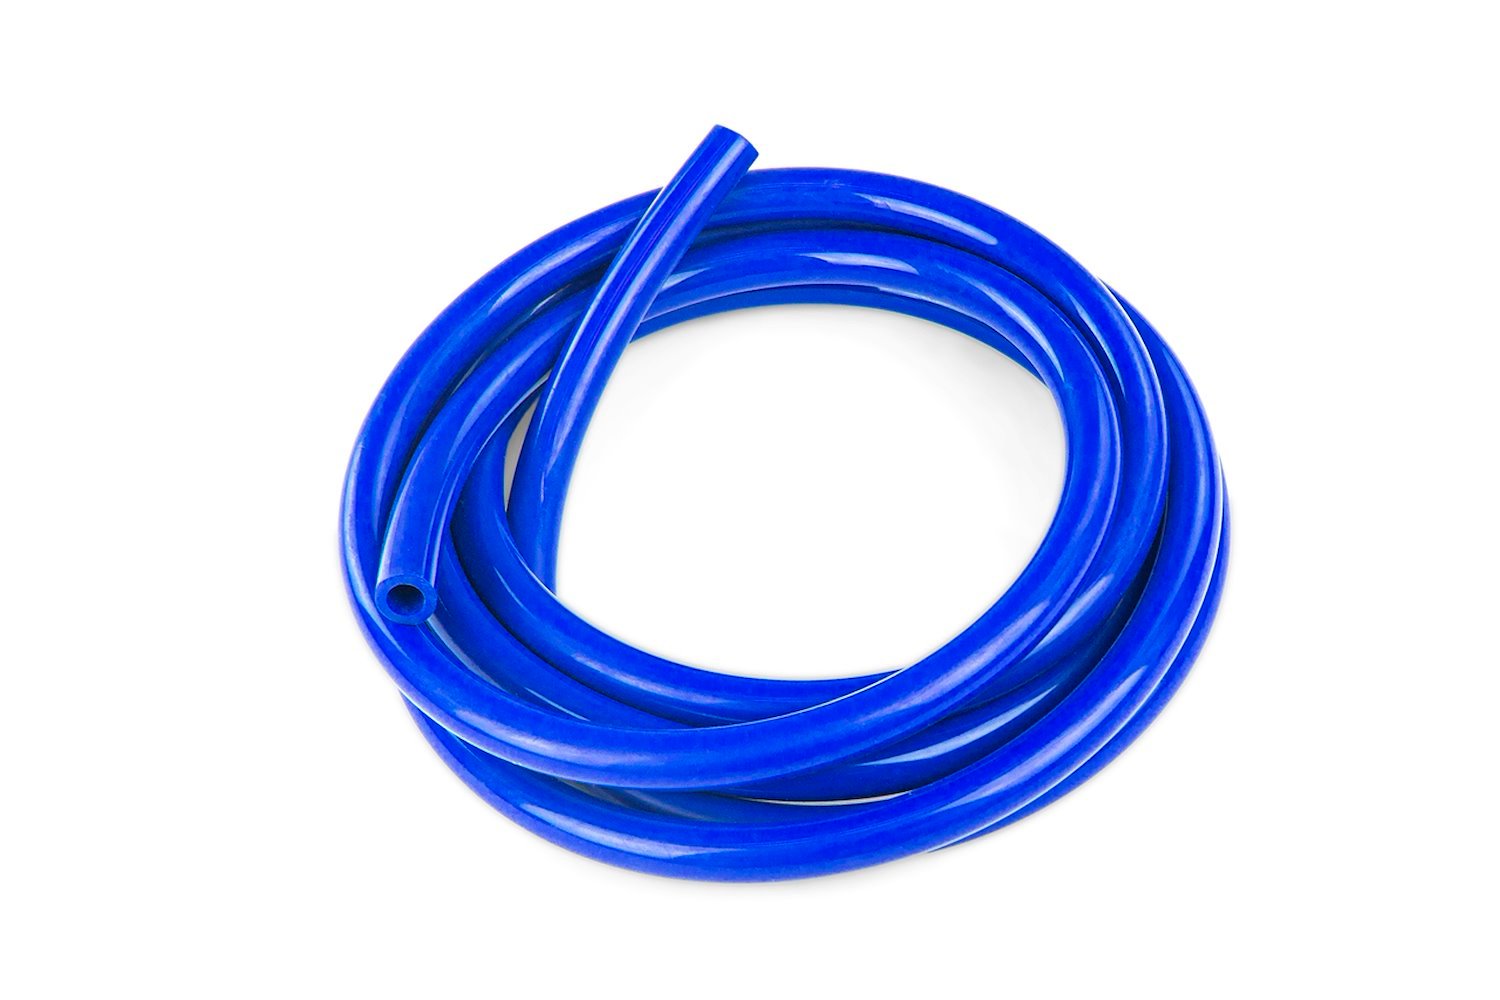 HTSVH8-BLUEx5 High-Temperature Silicone Vacuum Hose Tubing, 5/16 in. ID, 5 ft. Roll, Blue